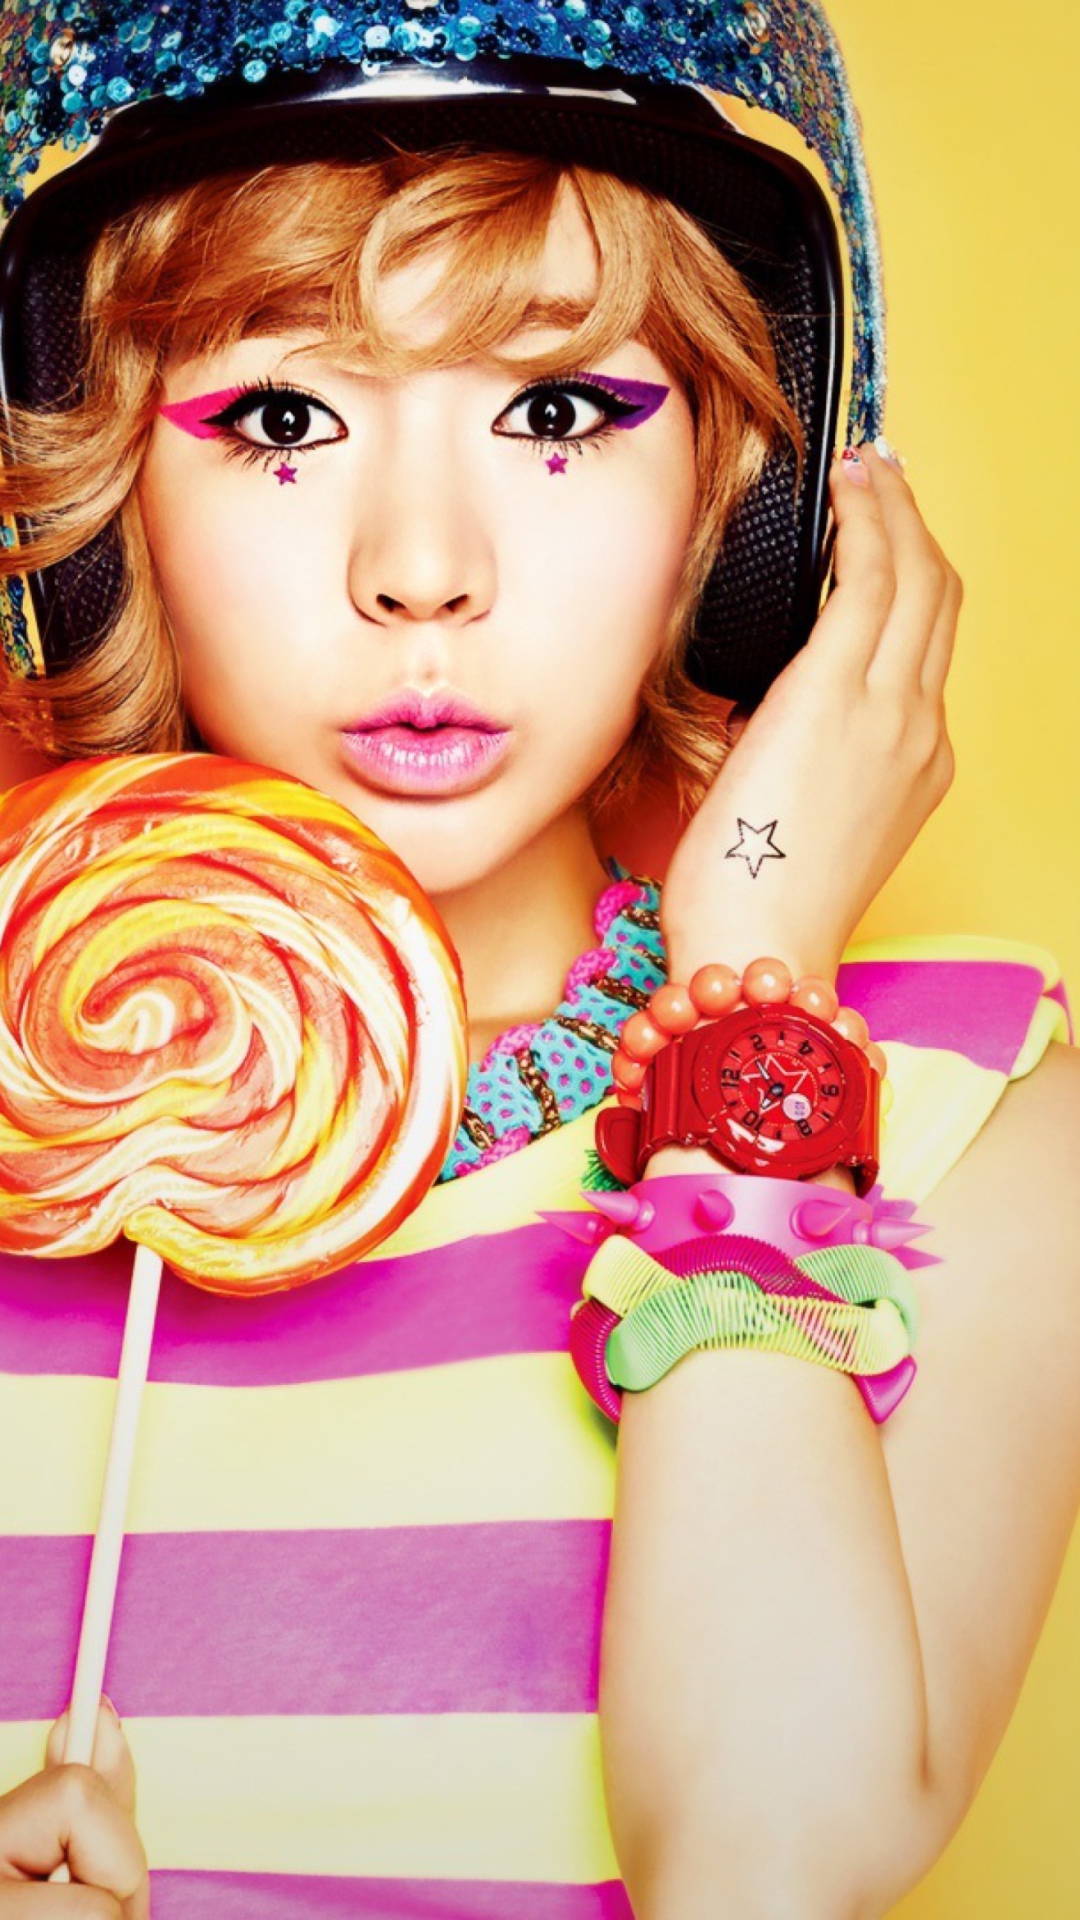 Girls Generation South Korean K-Pop Band wallpaper 1080x1920